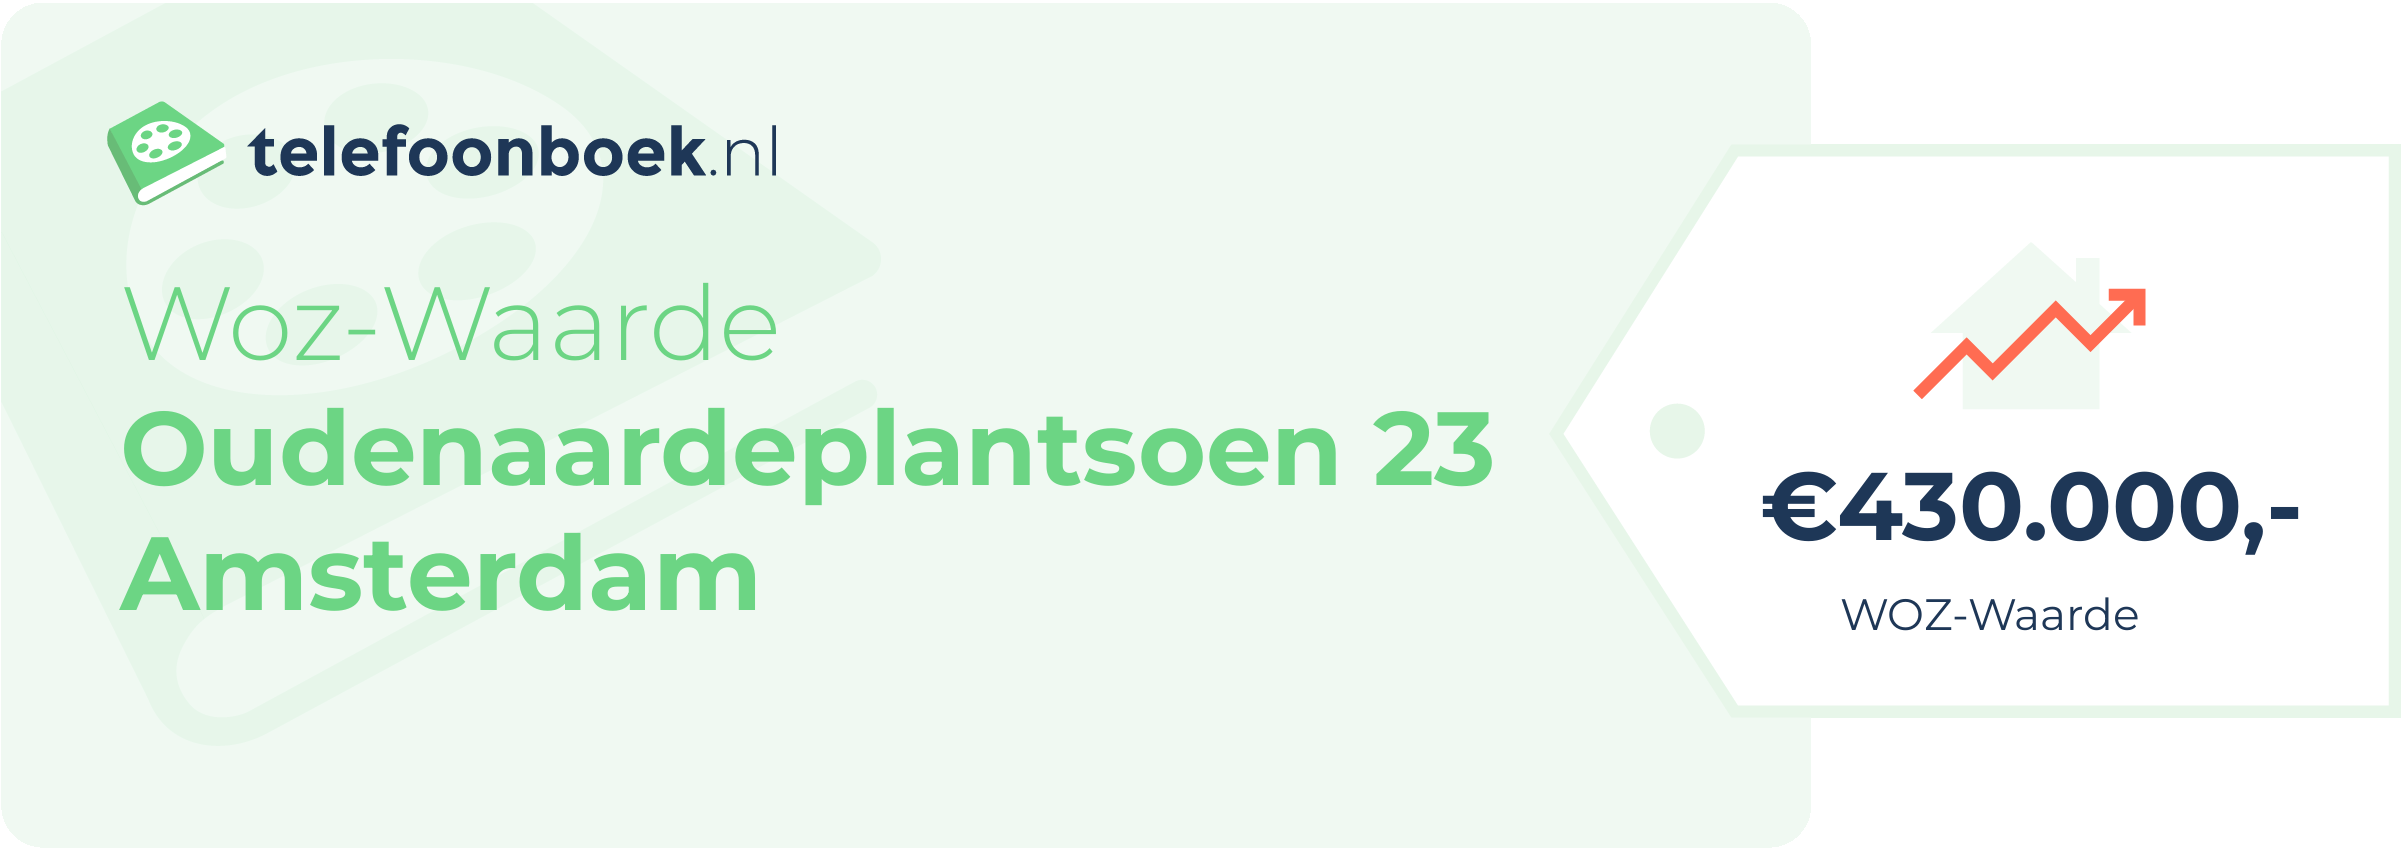 WOZ-waarde Oudenaardeplantsoen 23 Amsterdam